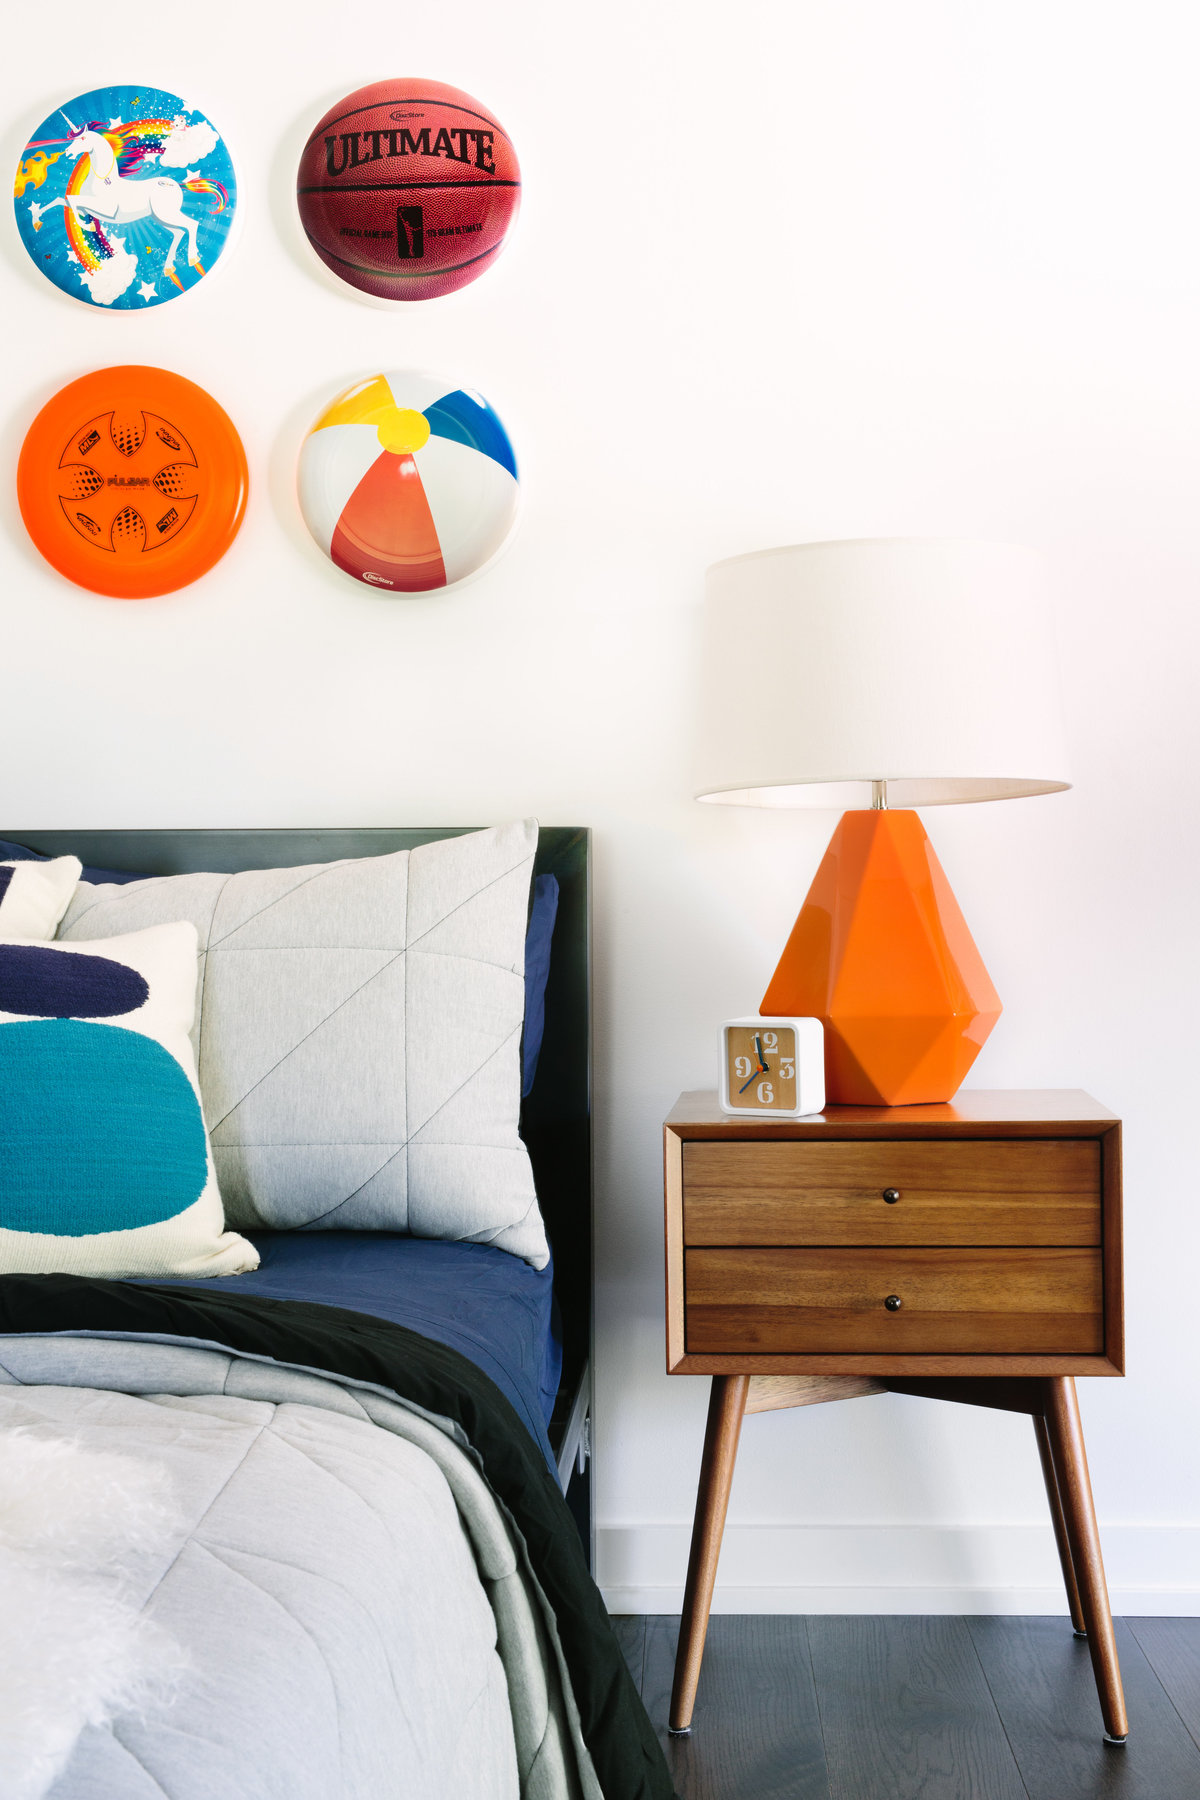 Boys bedroom with walnut nightstand, orange lamp, and frisbee art installation